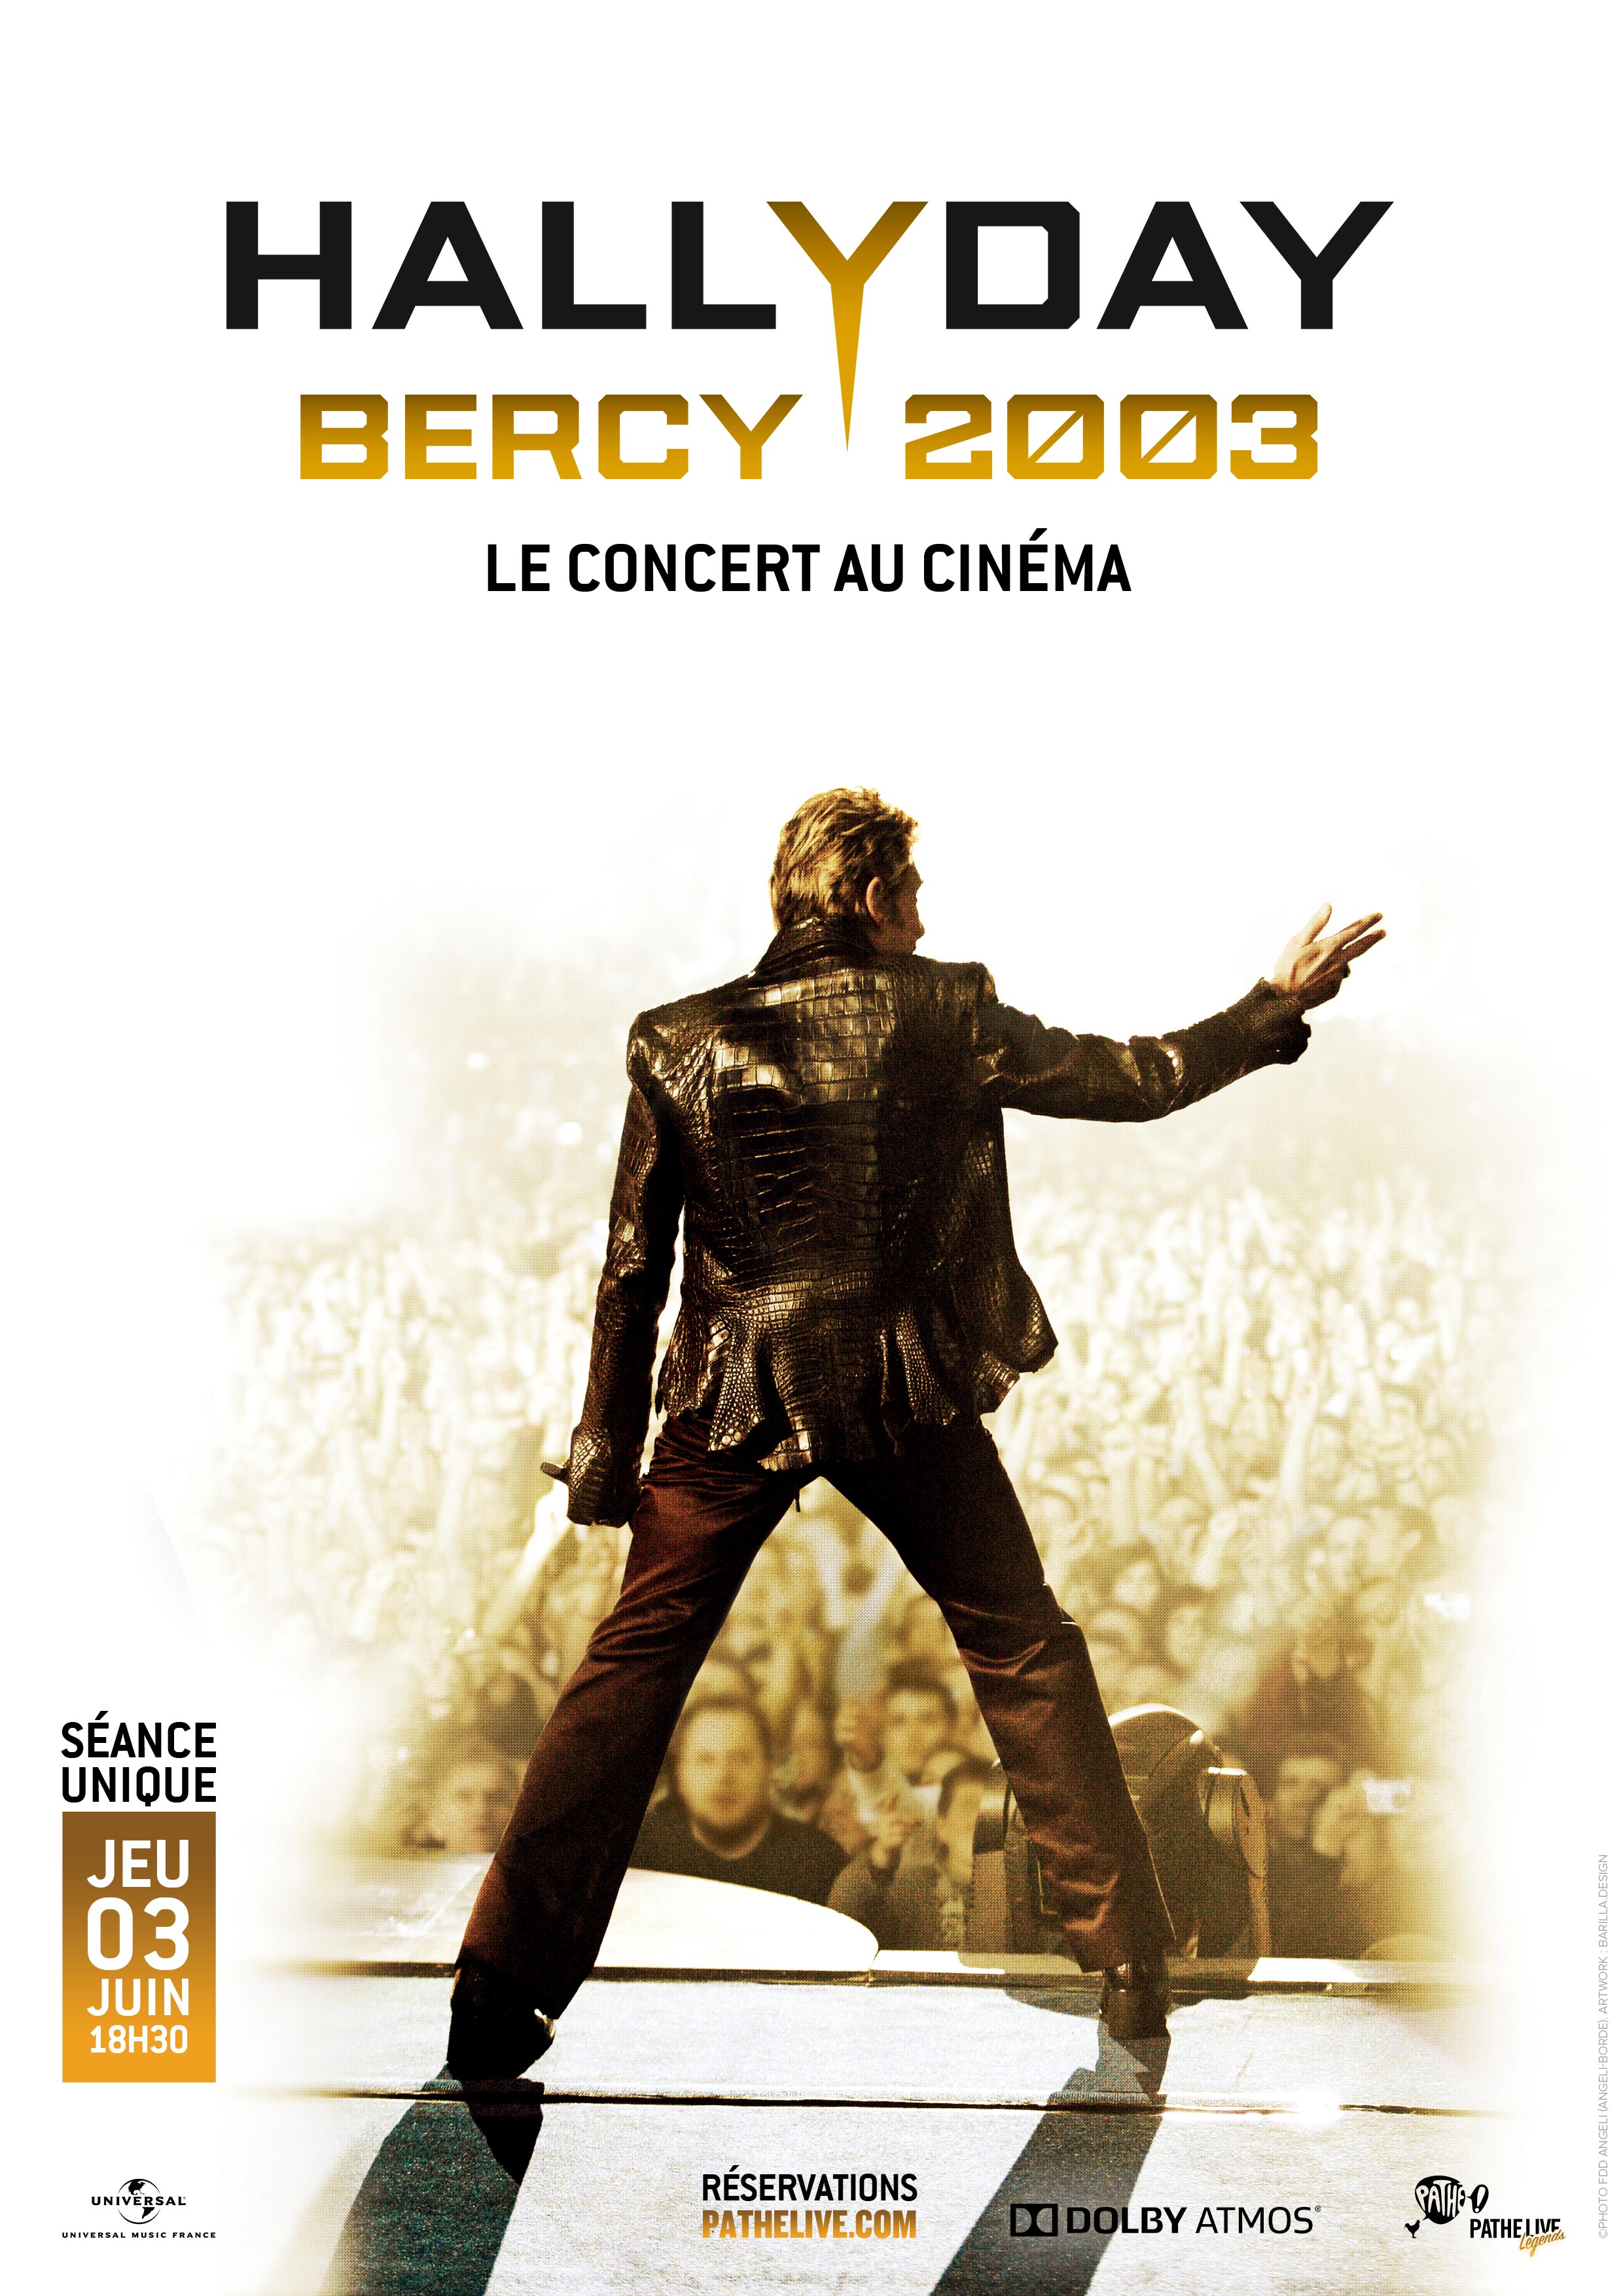 Johnny Hallyday - Bercy 2003 Le concert au cinéma